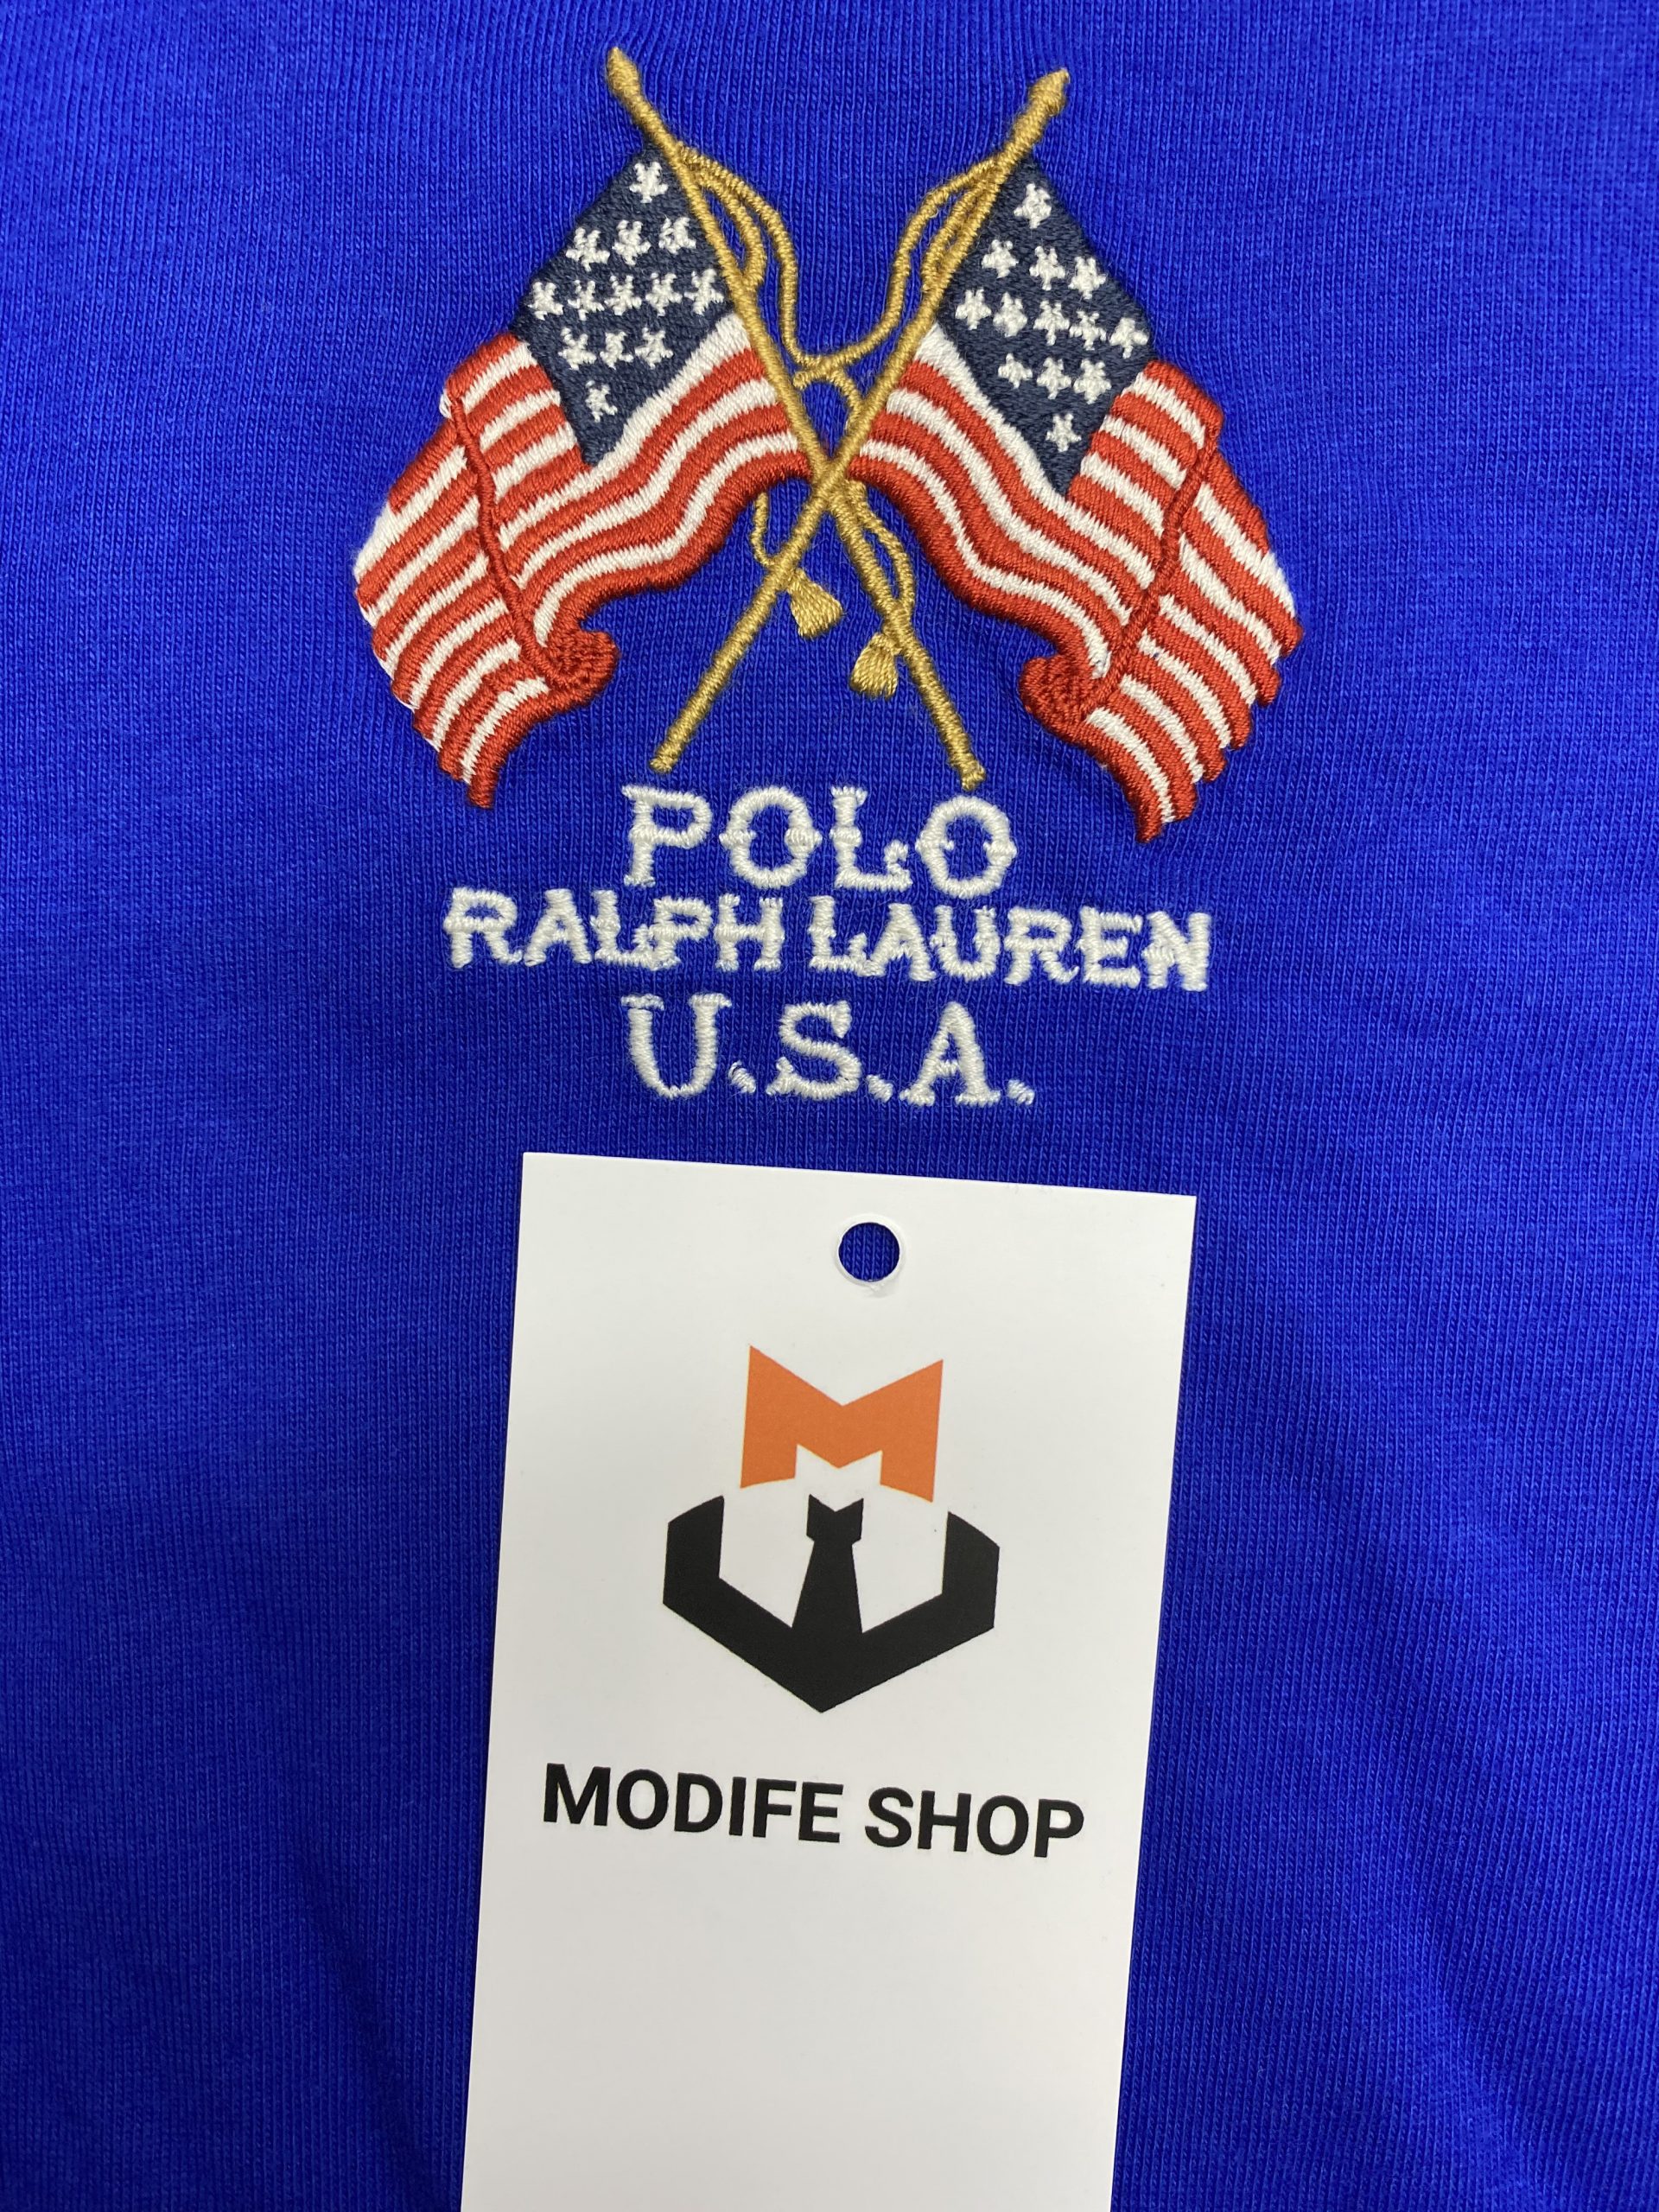 POLO RALPH LAUREN T-SHIRT USA CROSSED FLAGS - Modife Shop - Thời trang nam